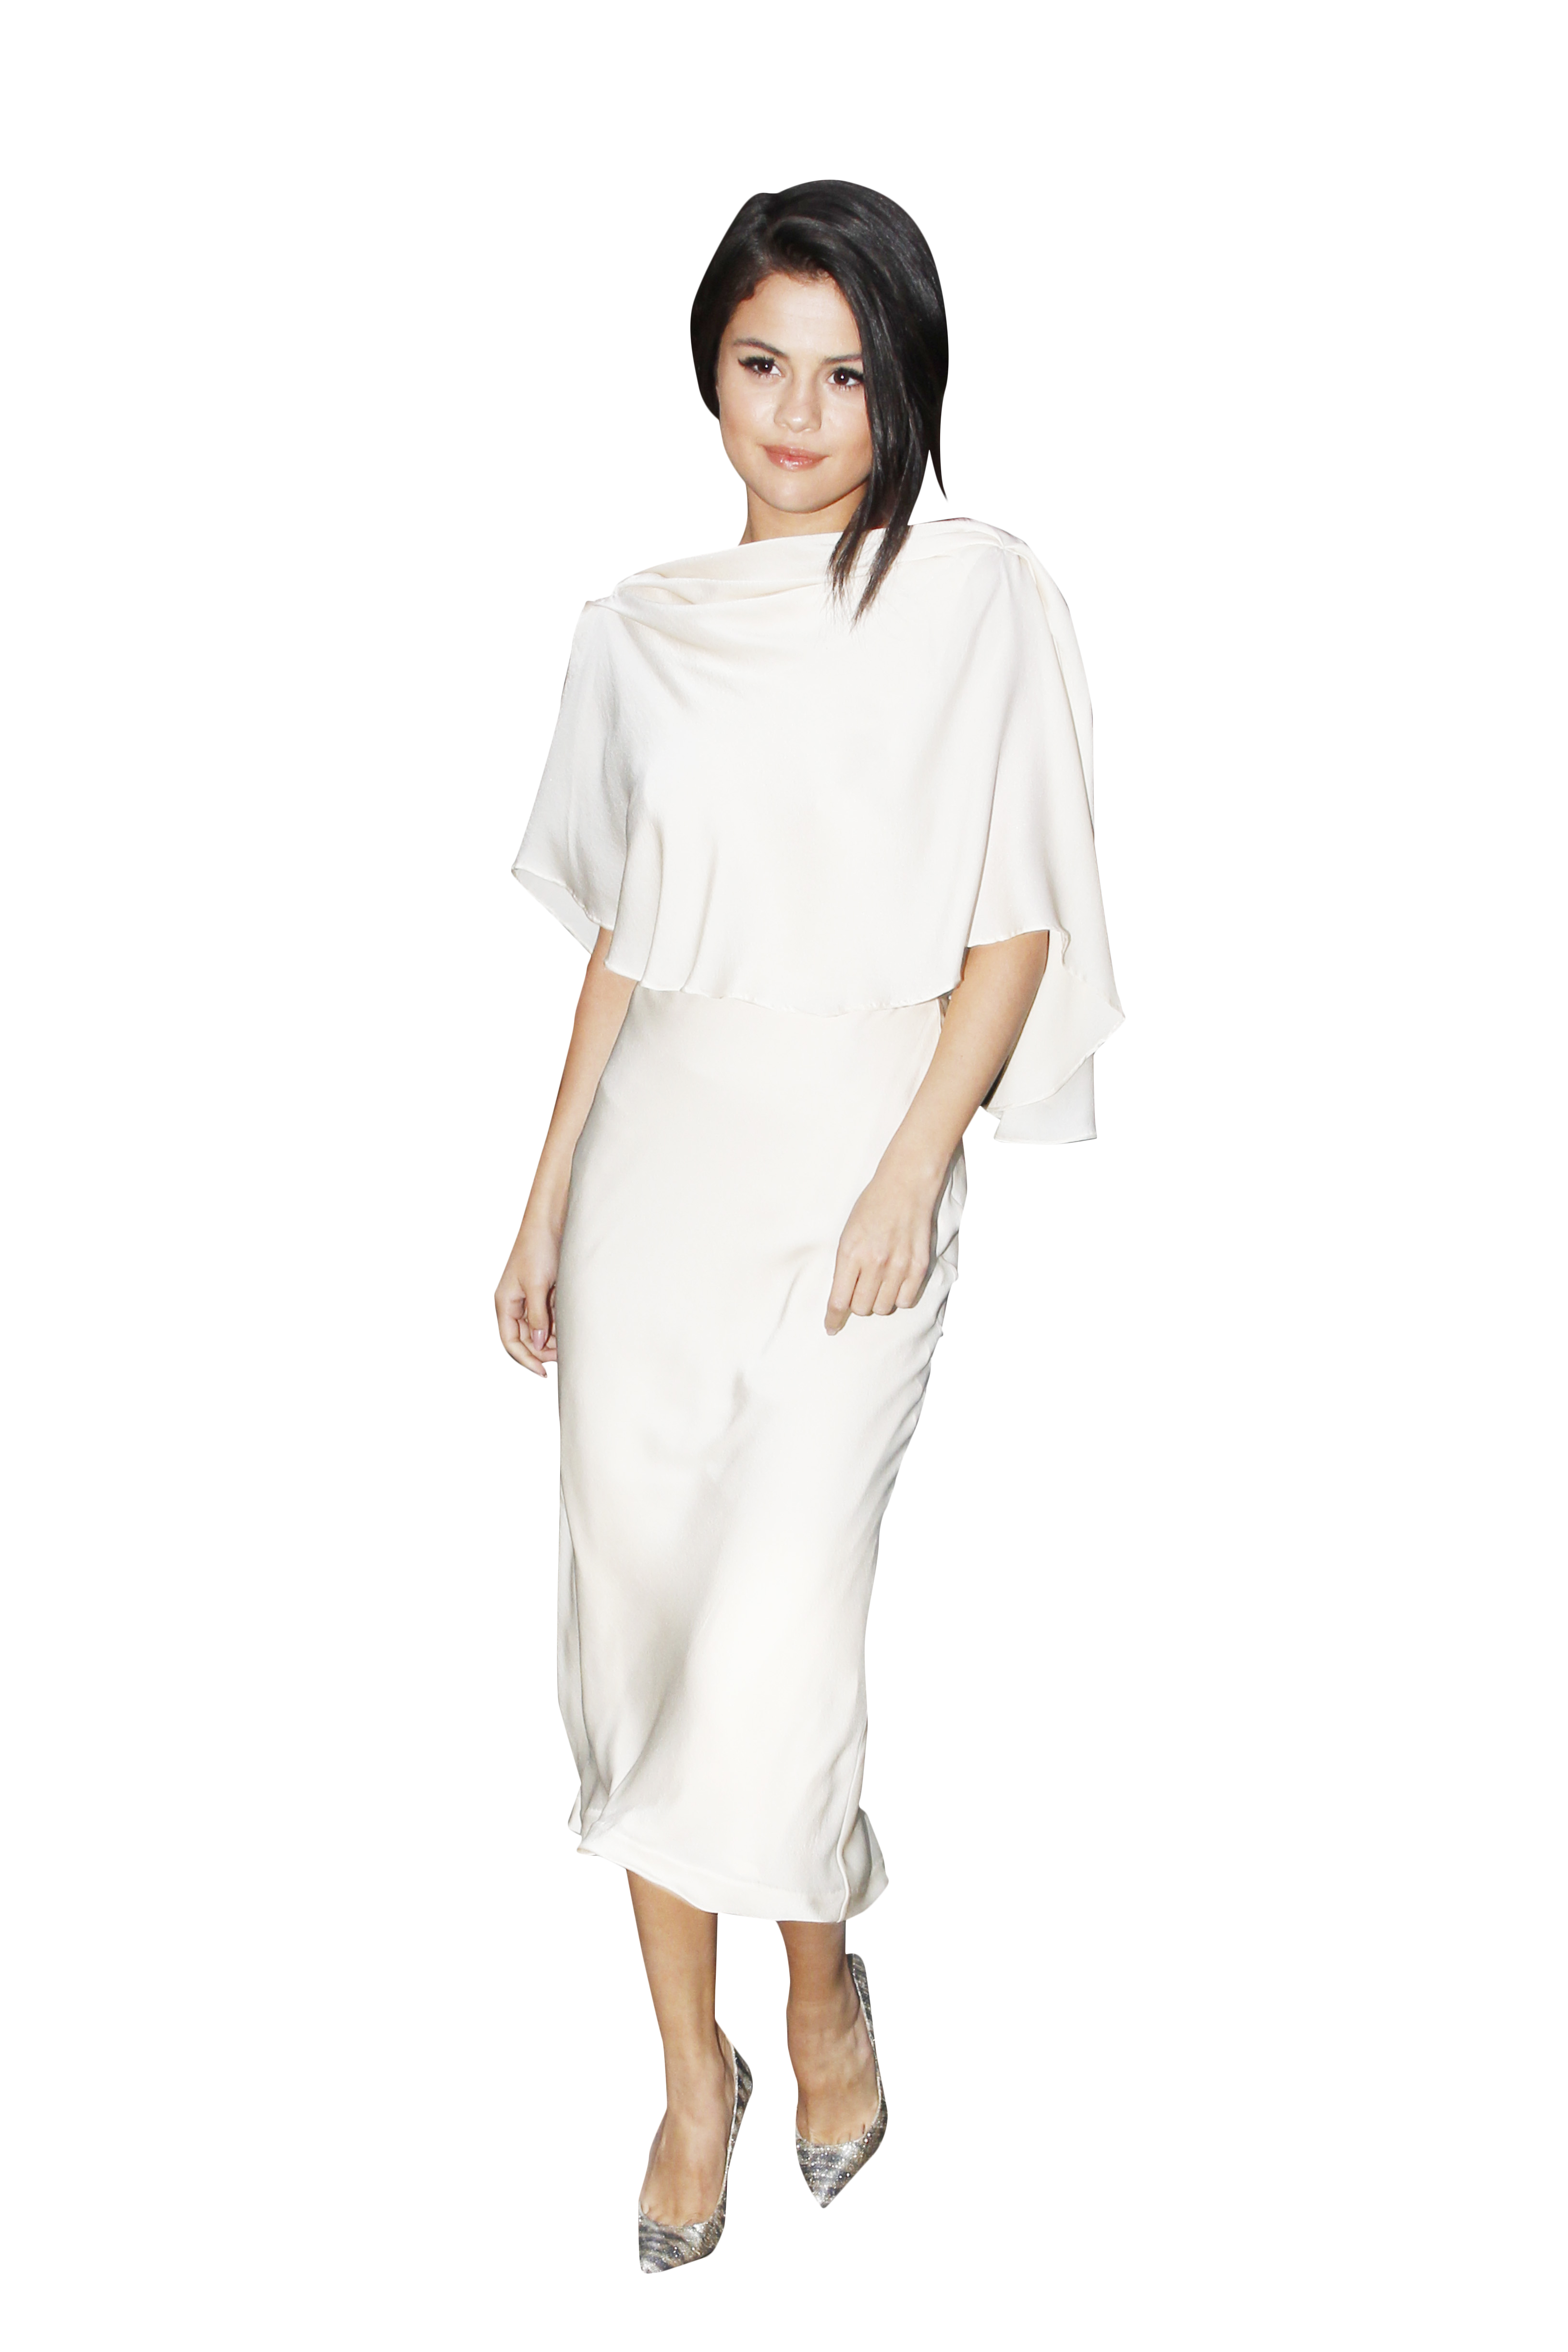 Selena Gomez White Dress PNG Image